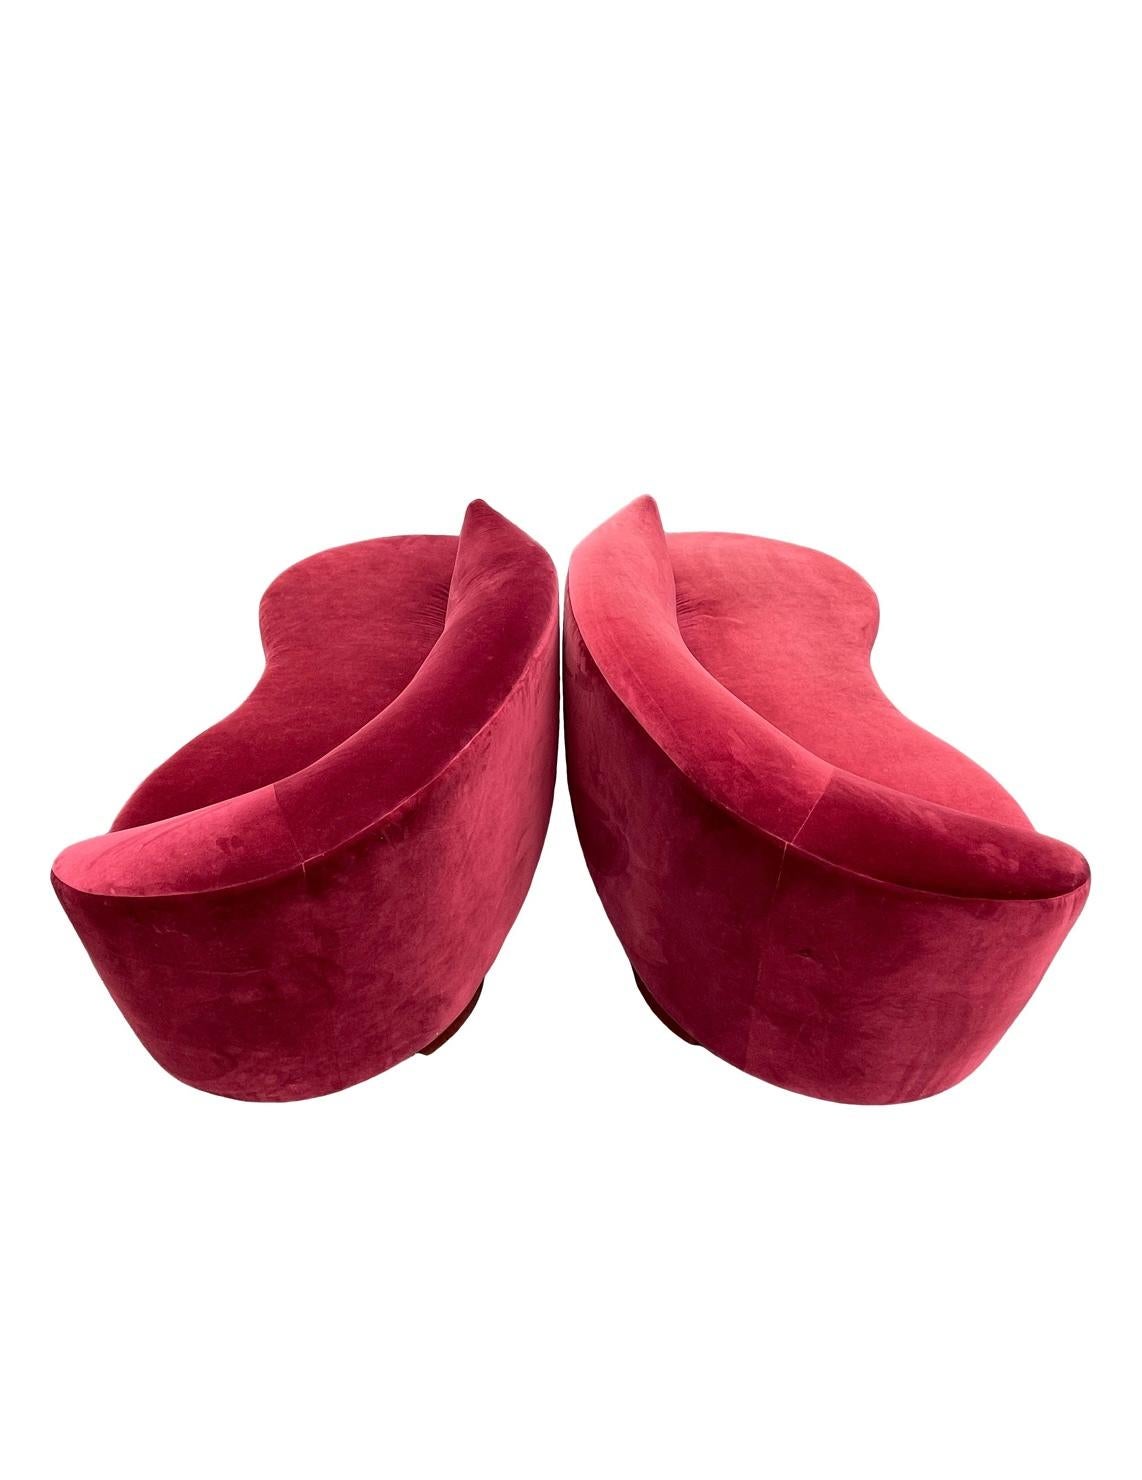 Art Deco Burgundy Red Velvet Asymmetrical Cloud Sofa Set by Weiman  For Sale